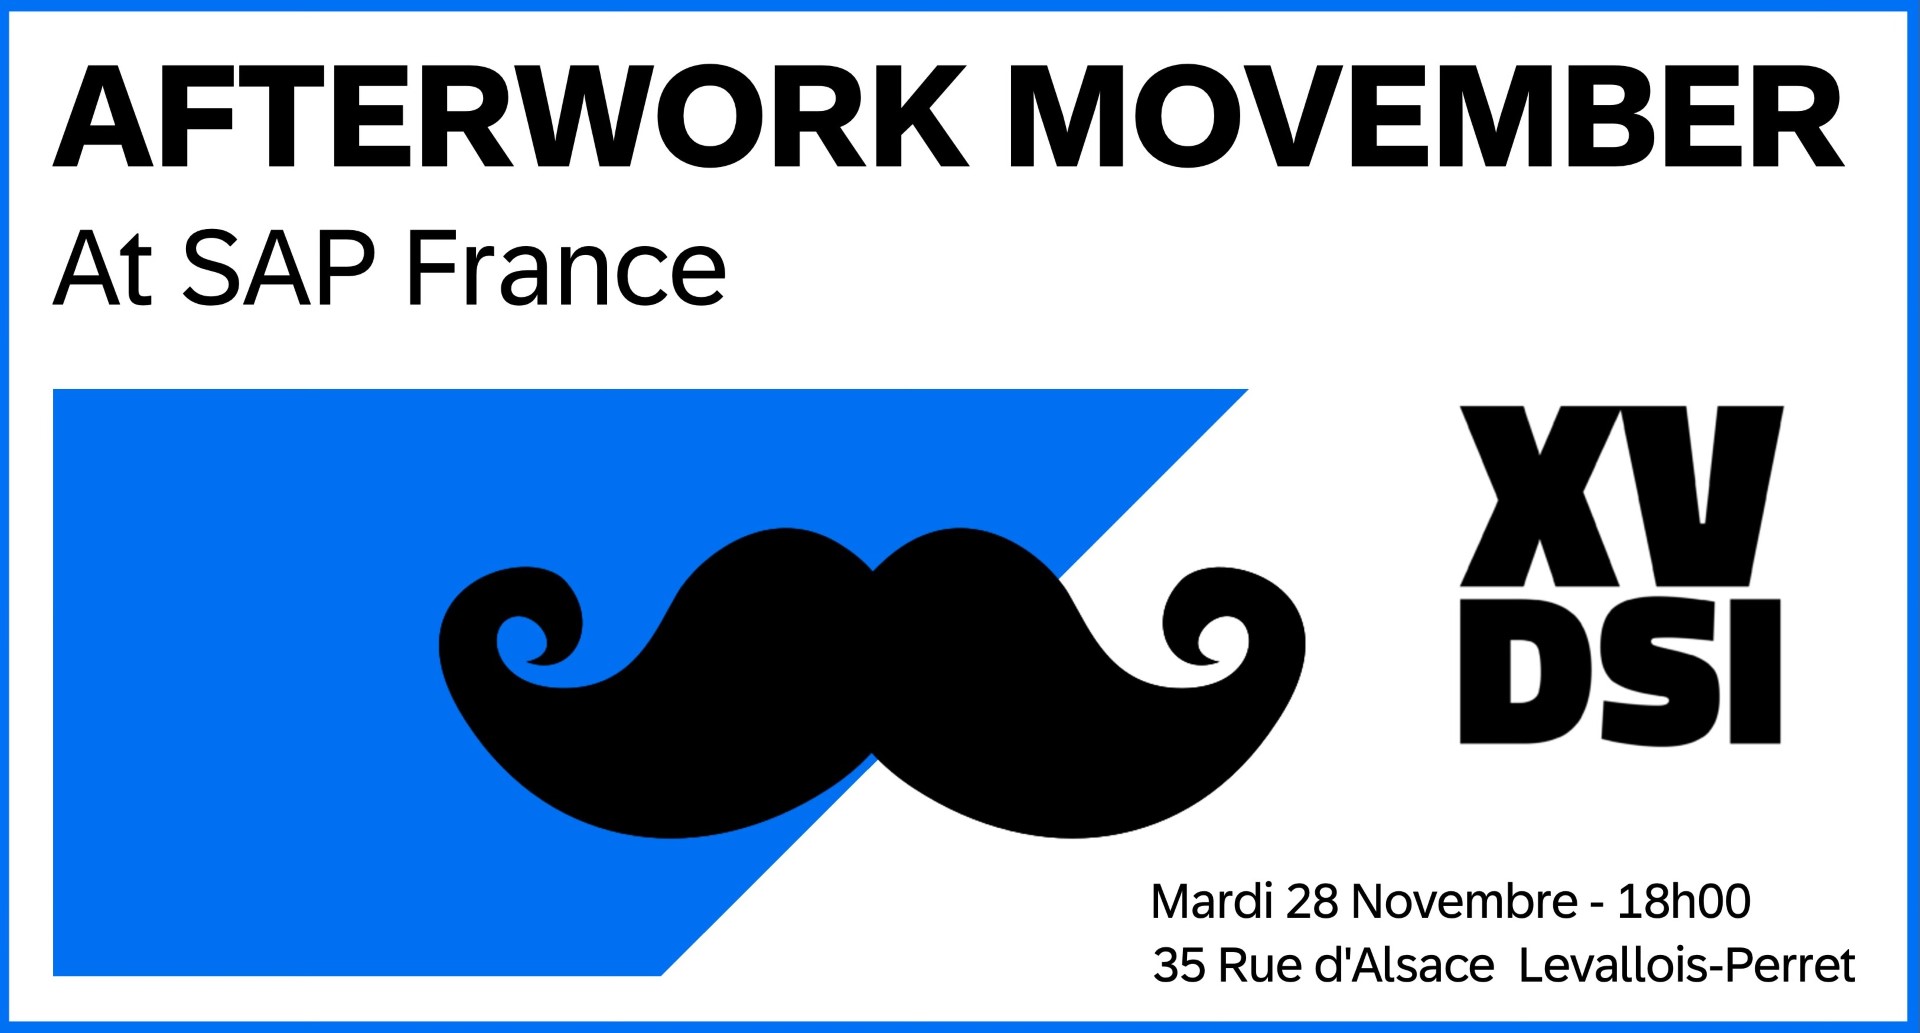 Afterwork Movember at SAP France